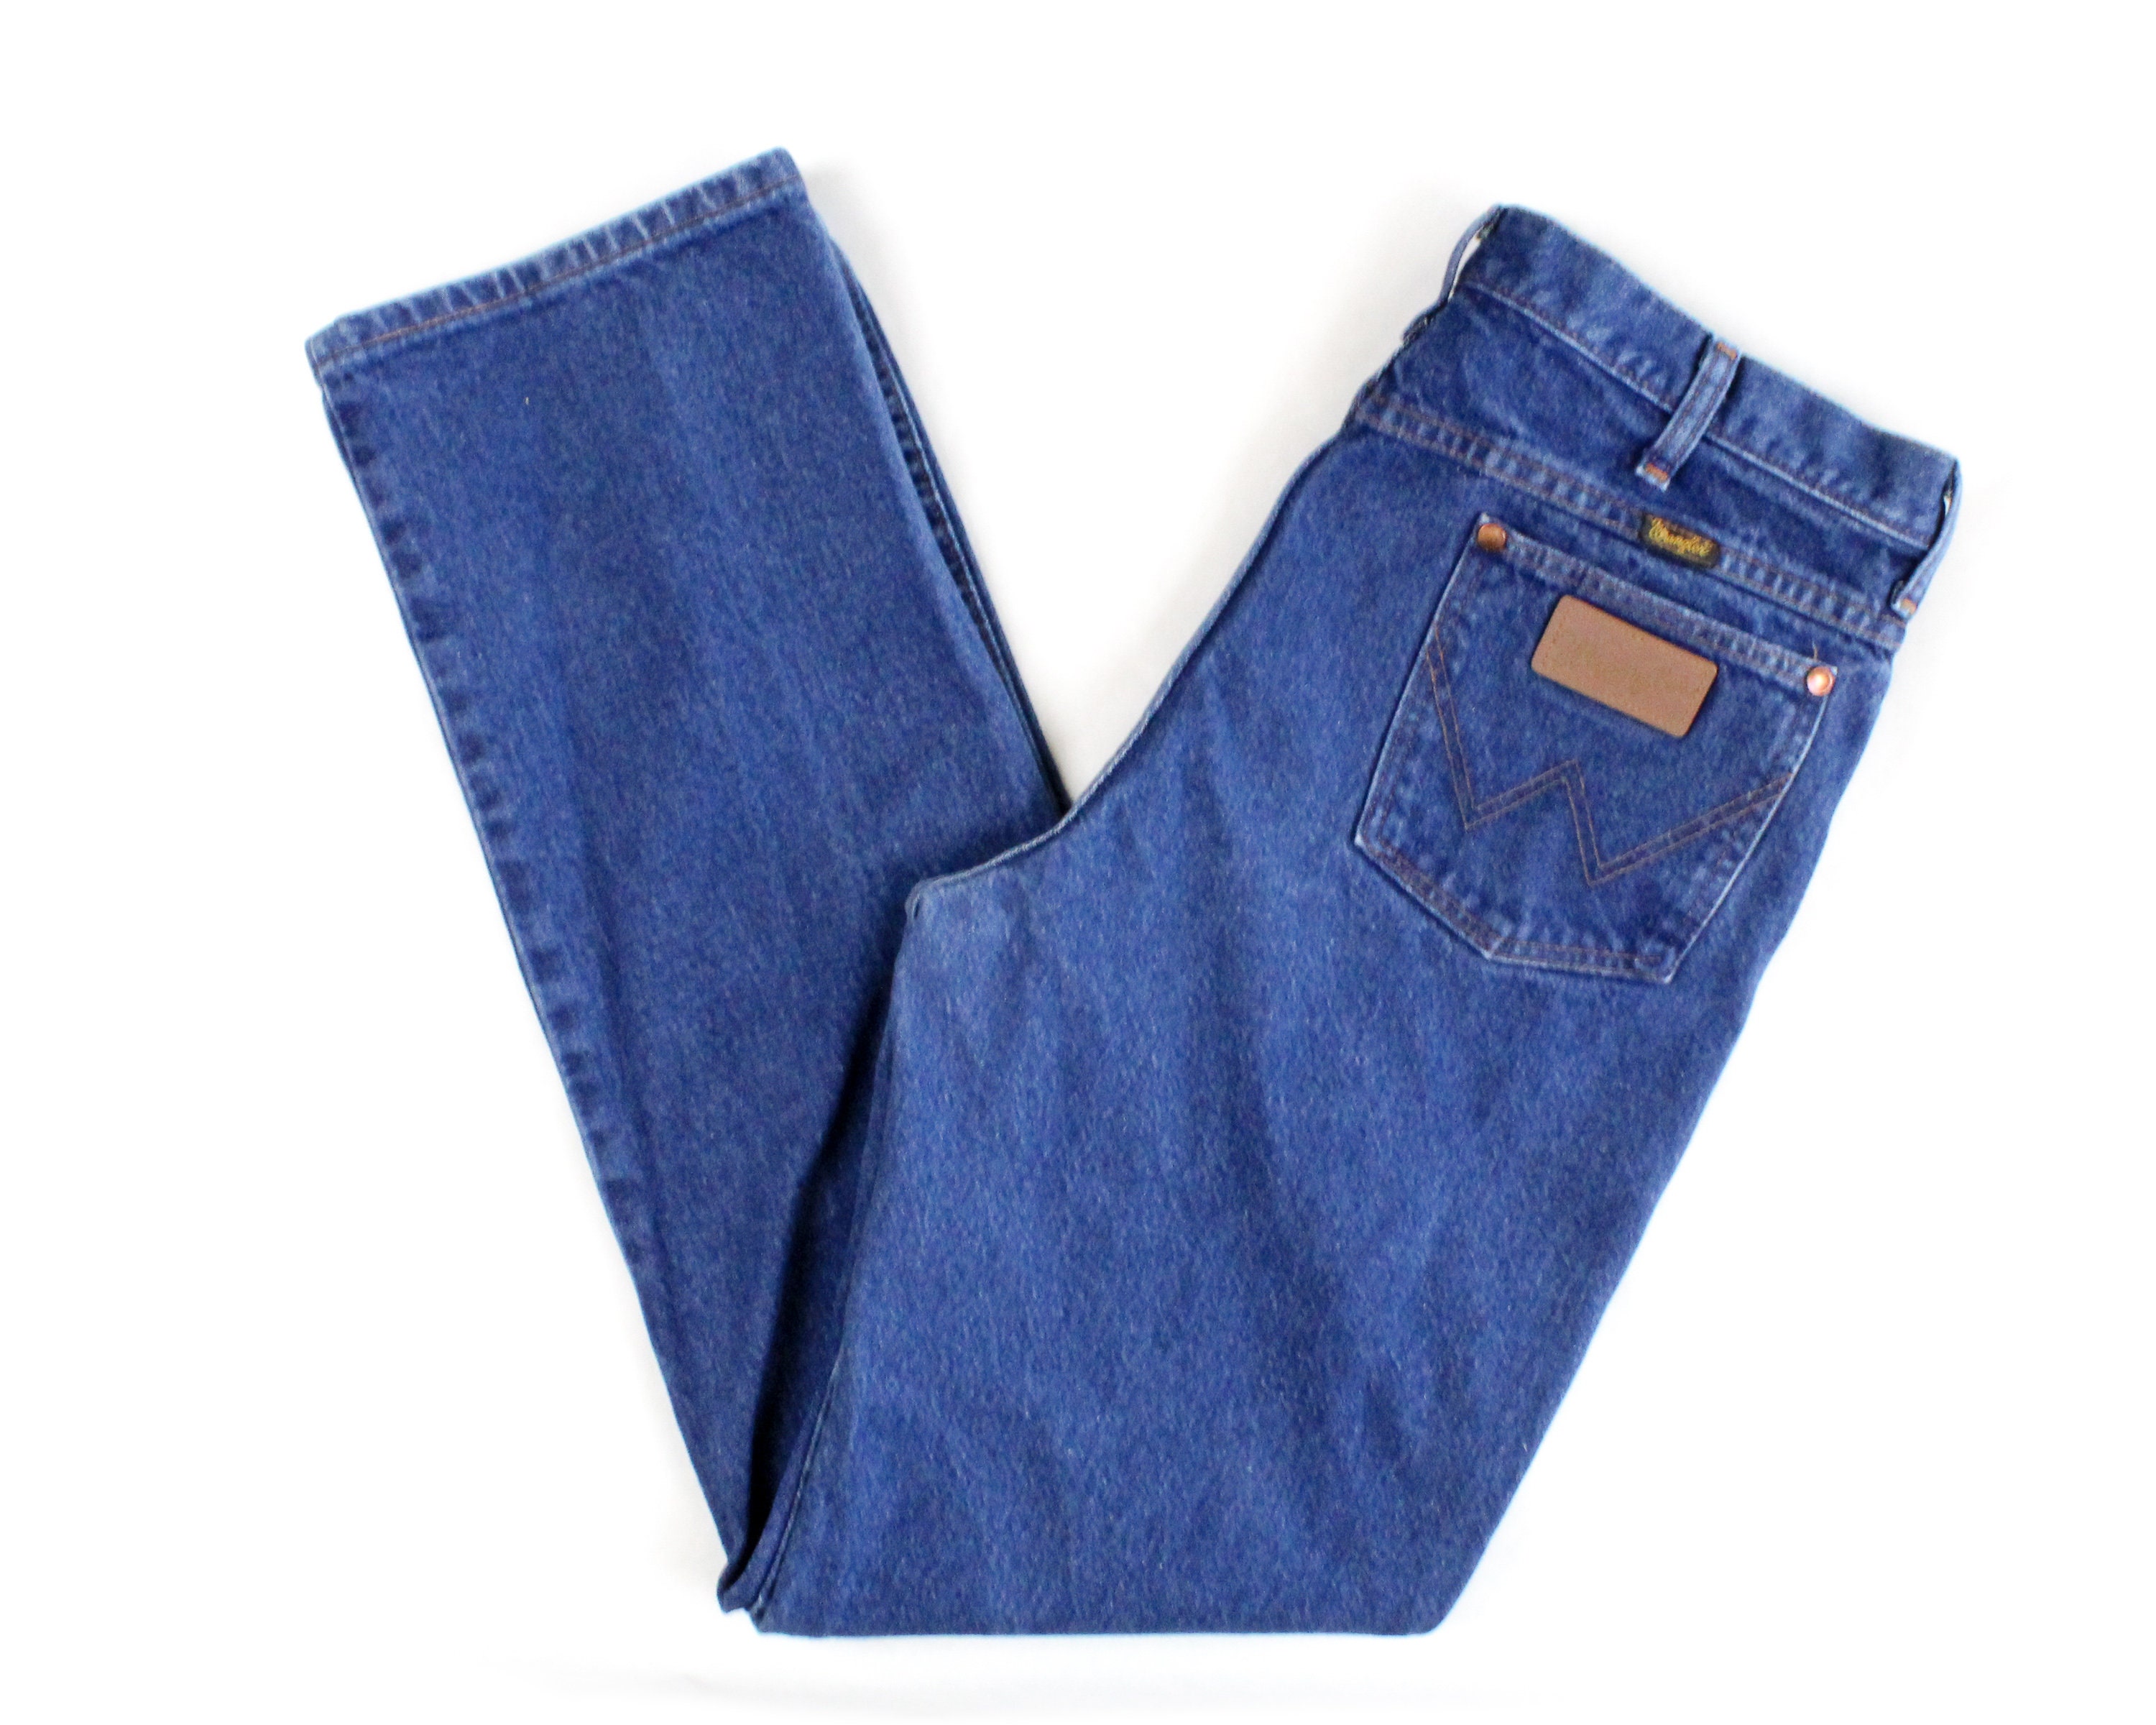 Vintage Men's Wrangler Blue Jeans / 34x32 / Made in USA